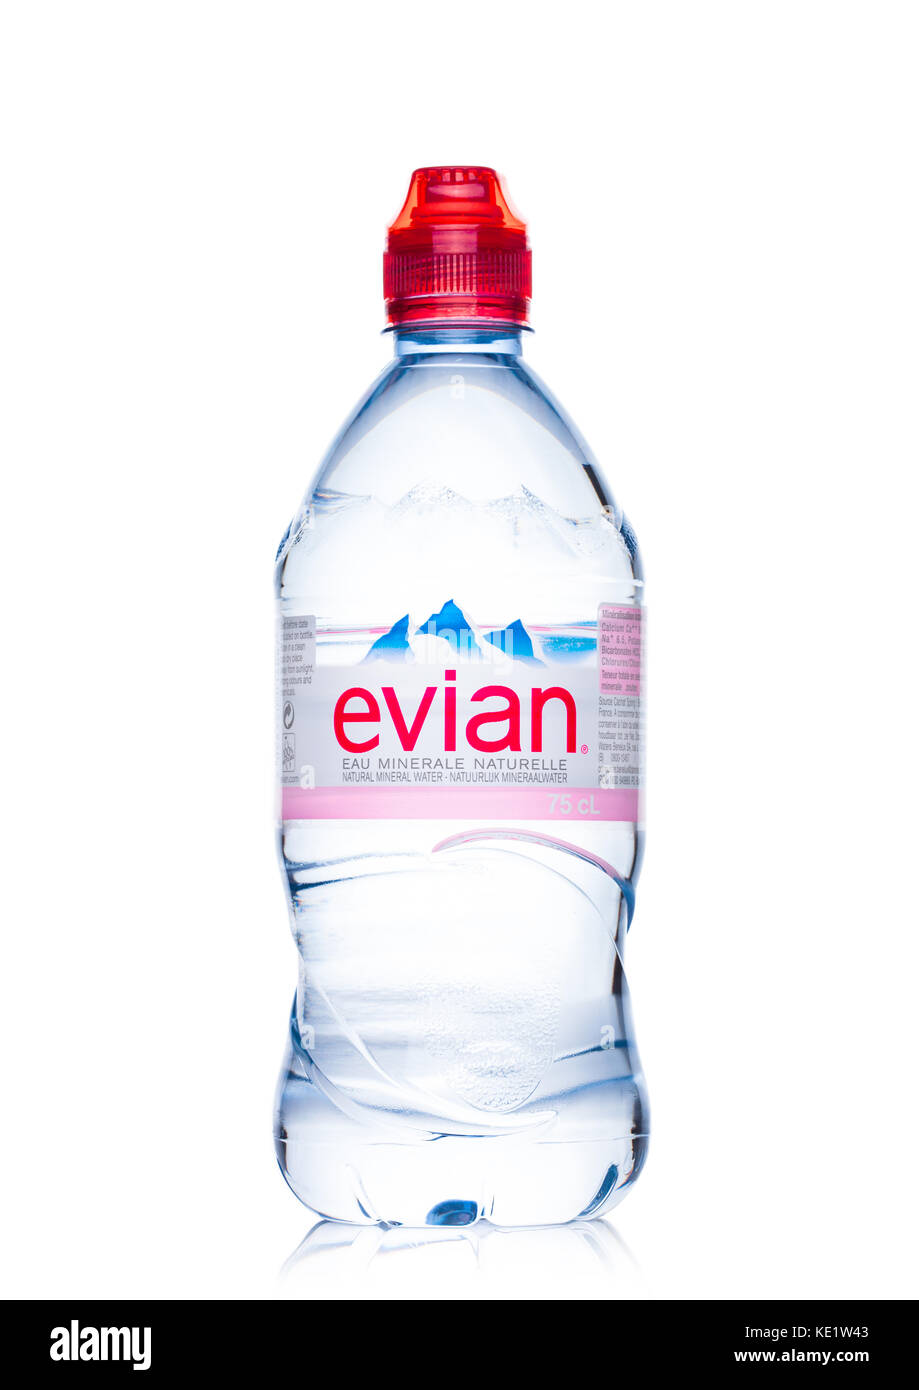 Evian Water Bra